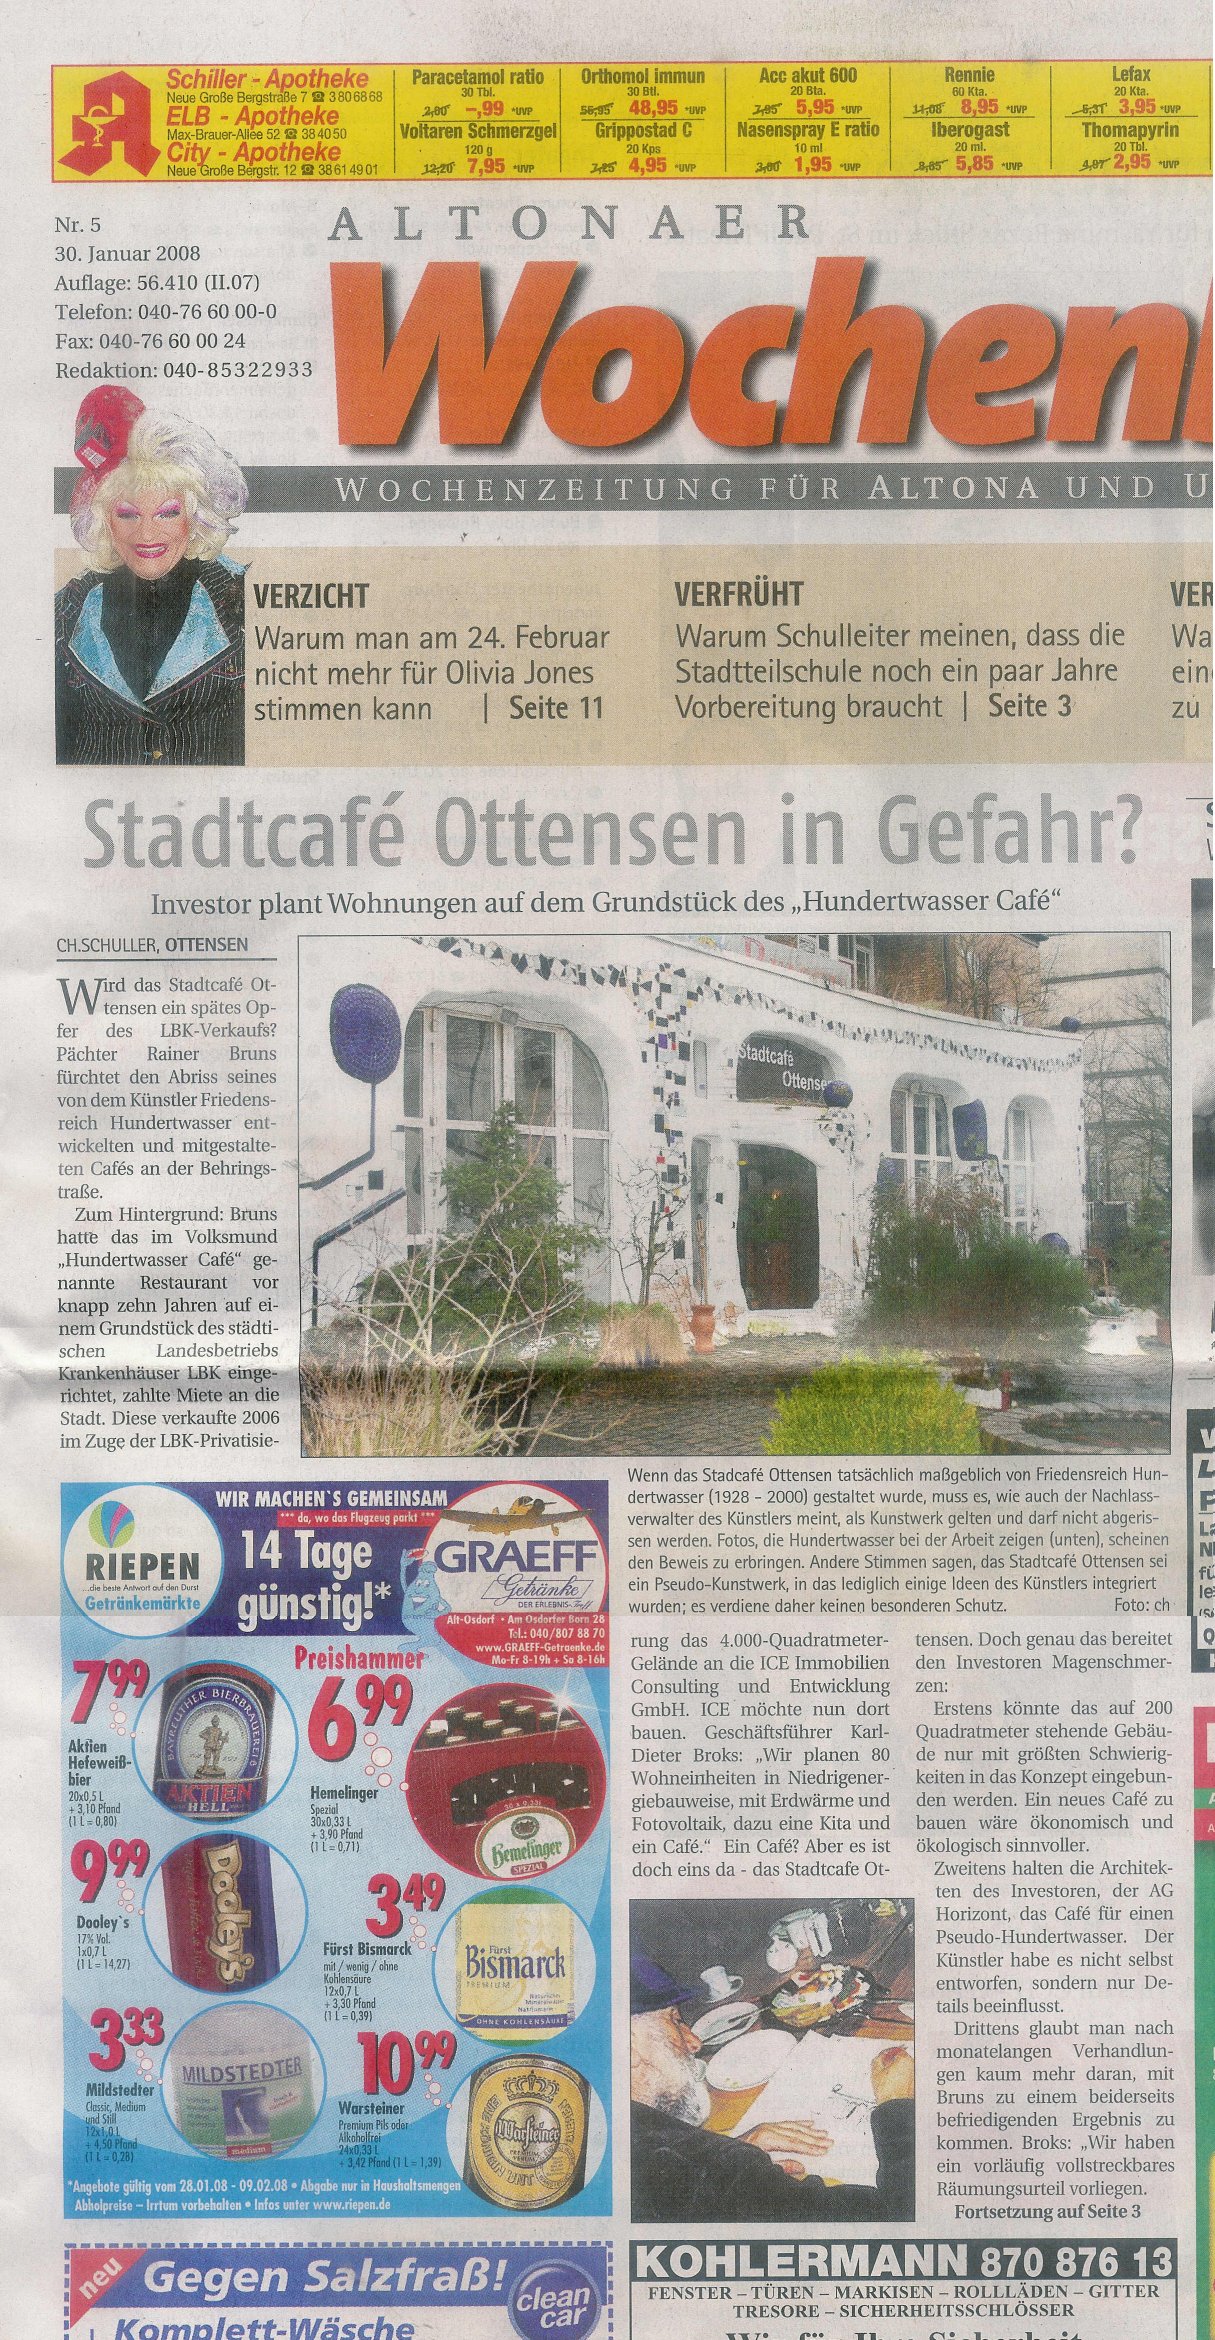 Altonaer Wochenblatt Nr. 5 vom 30.1.2008, Titelseite